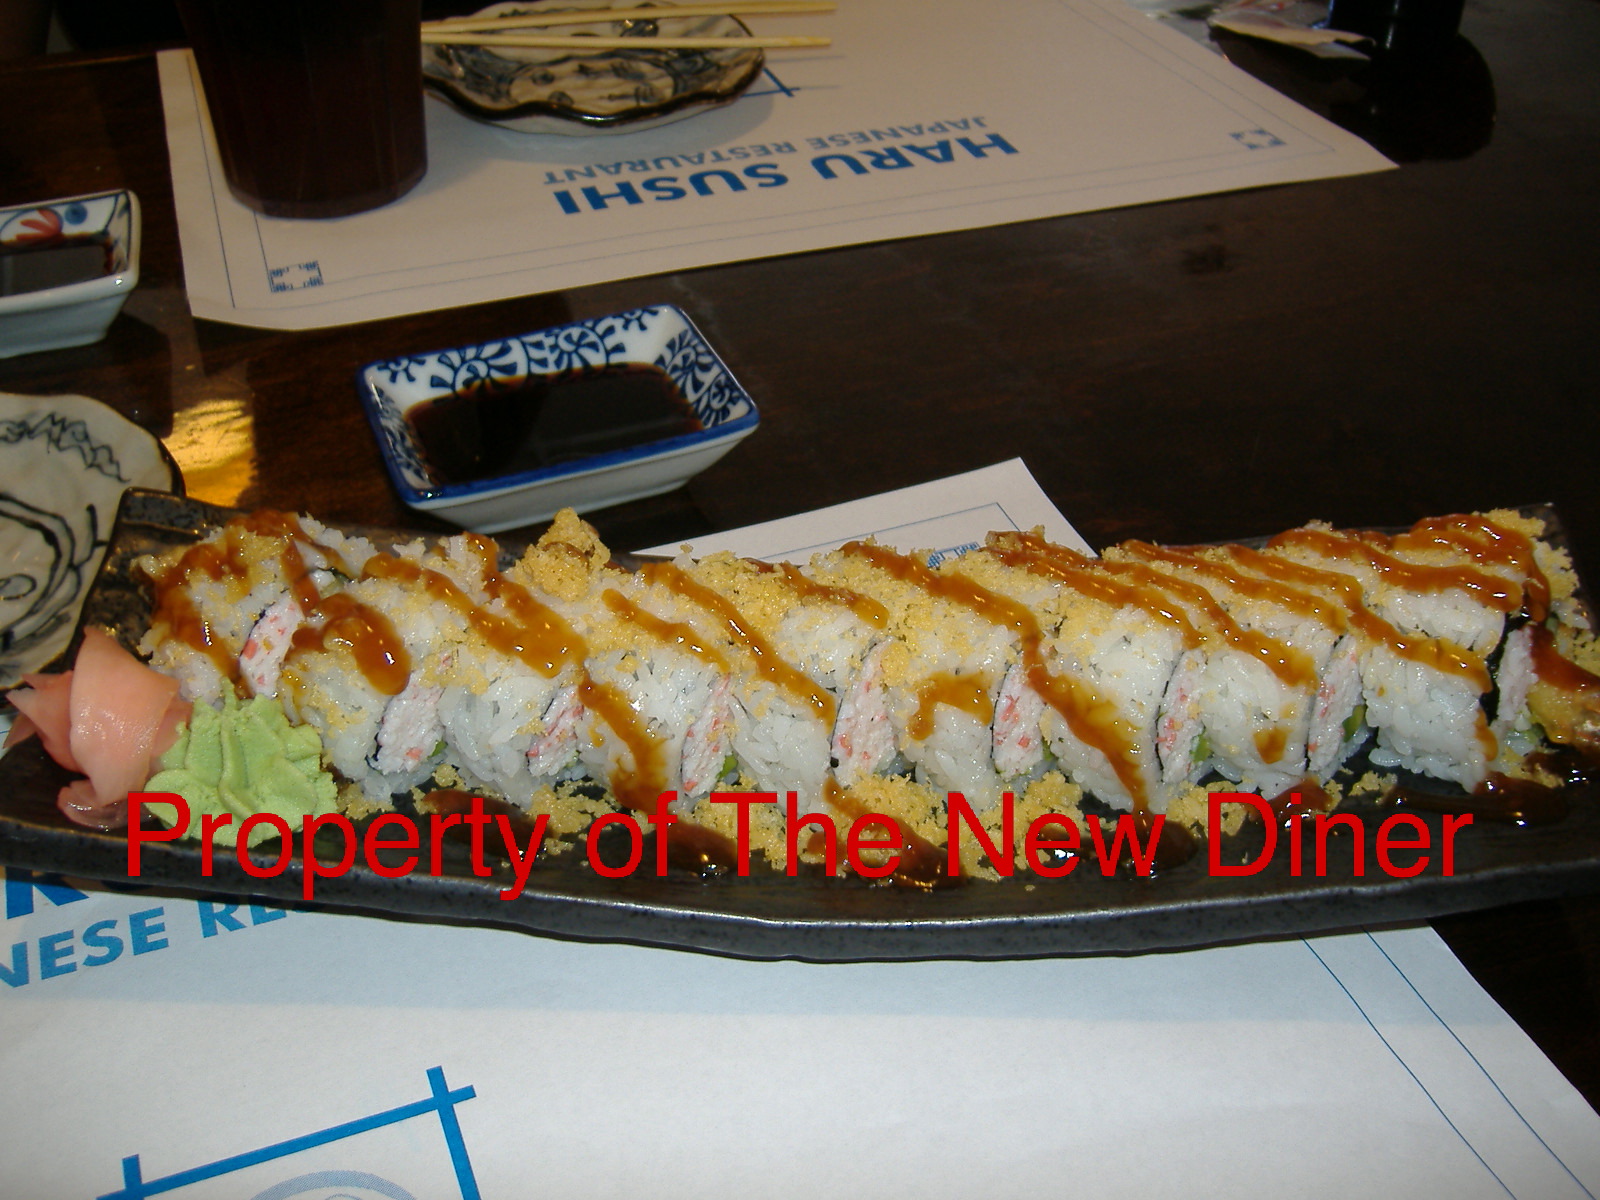 Sushi Tiger Roll